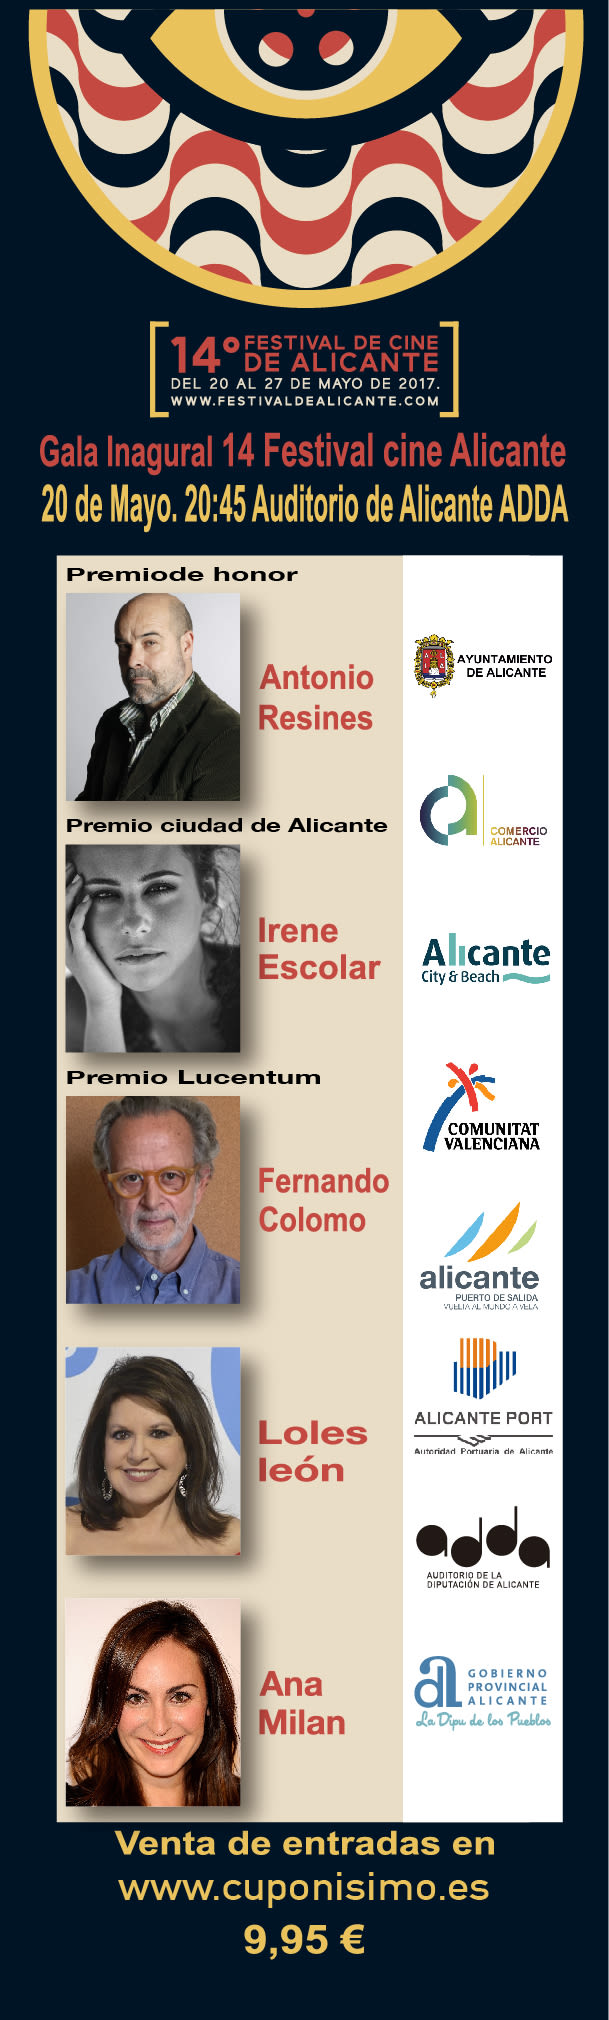 Festival de Cine Alicante 15